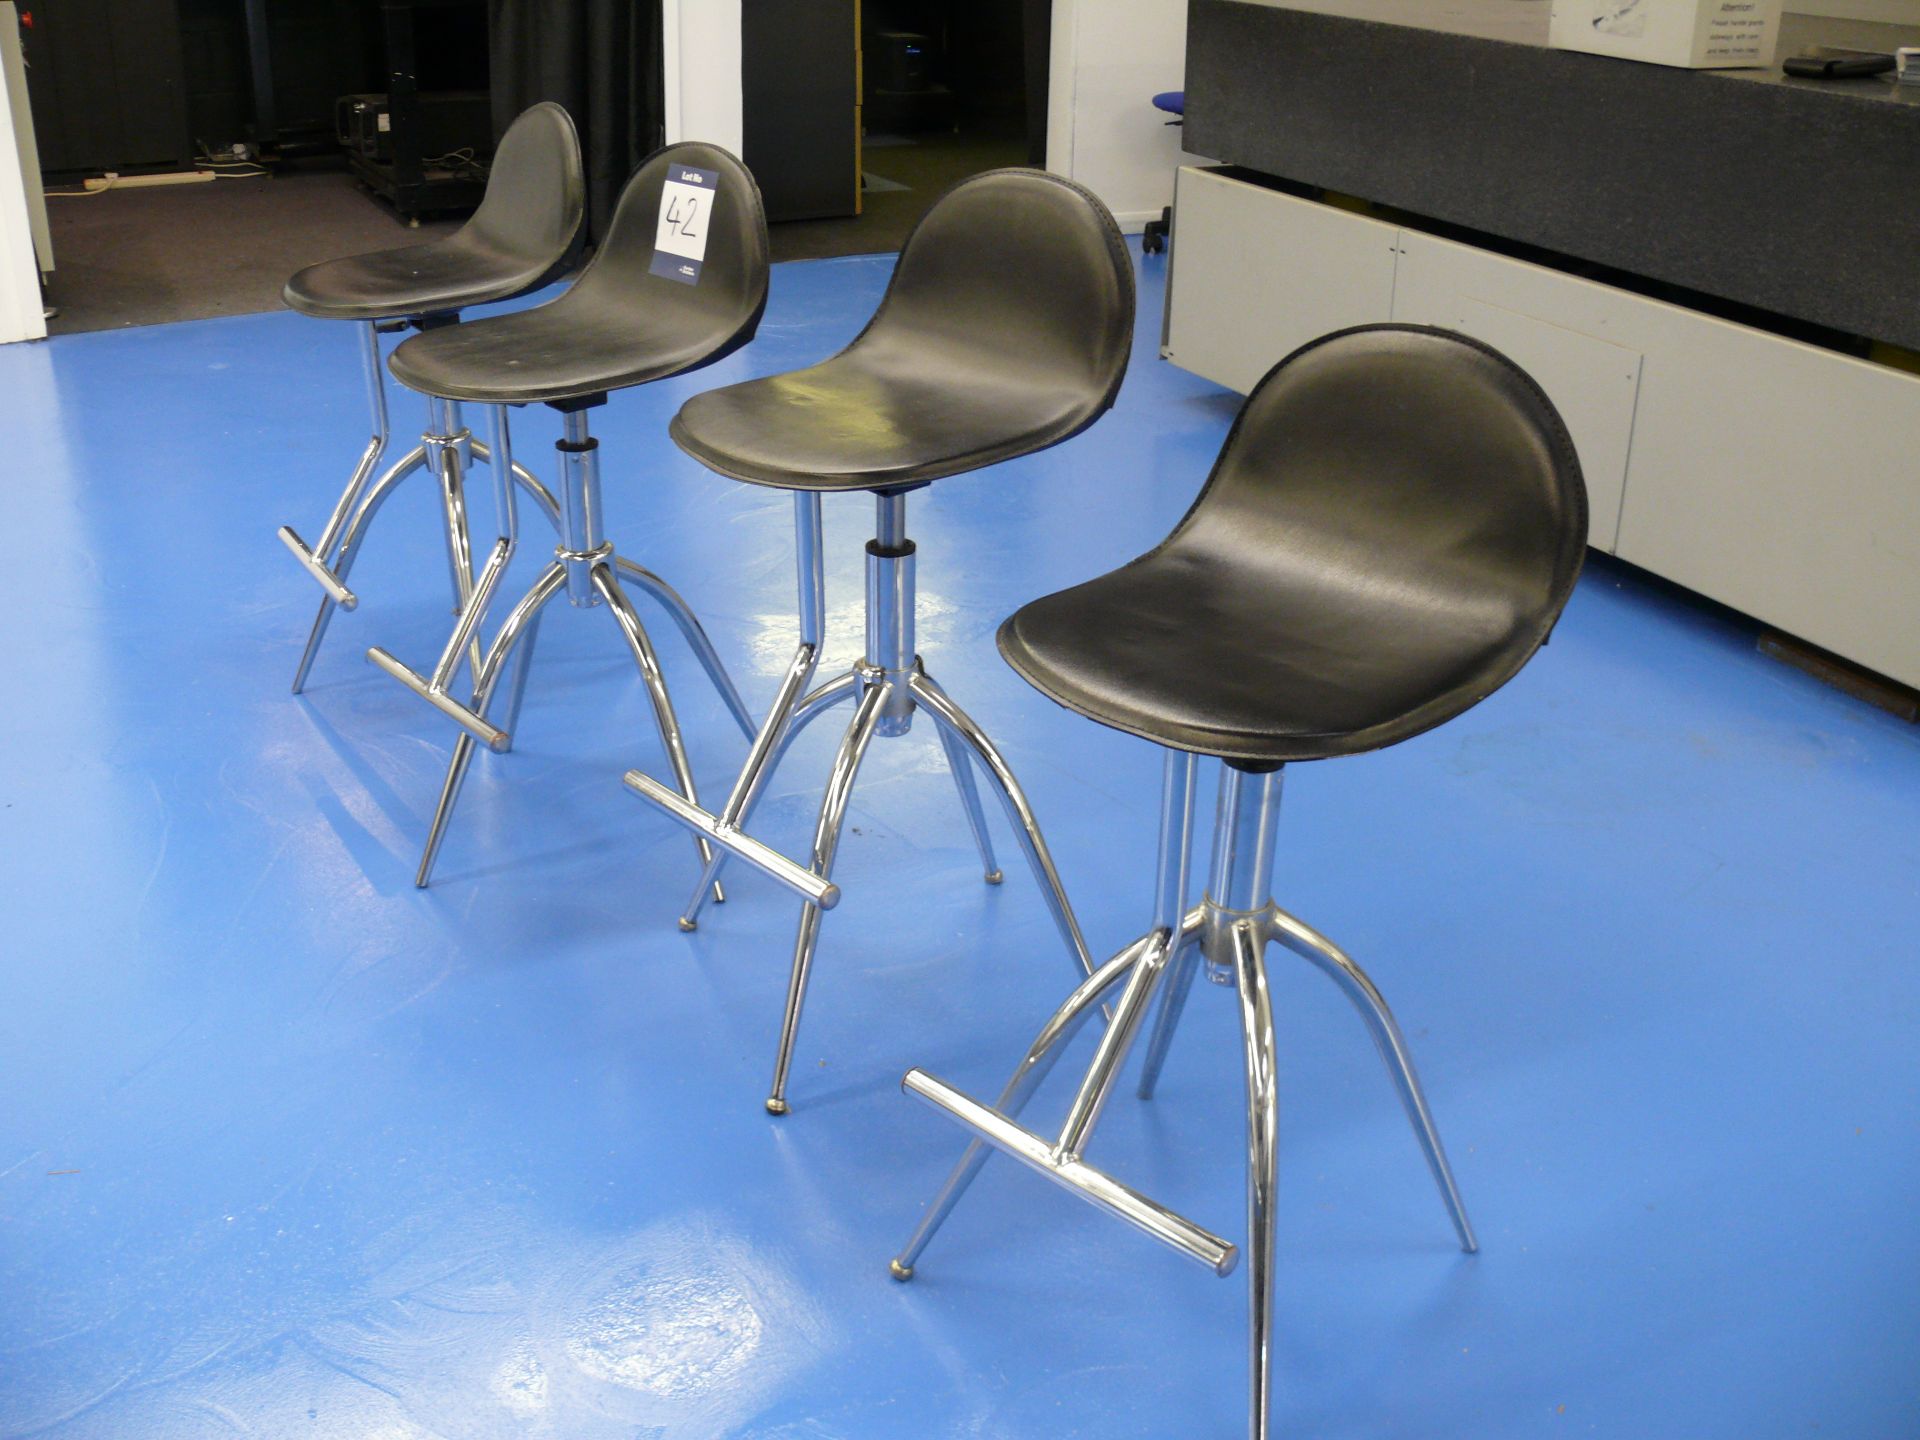 4 chrome framed operators chairs